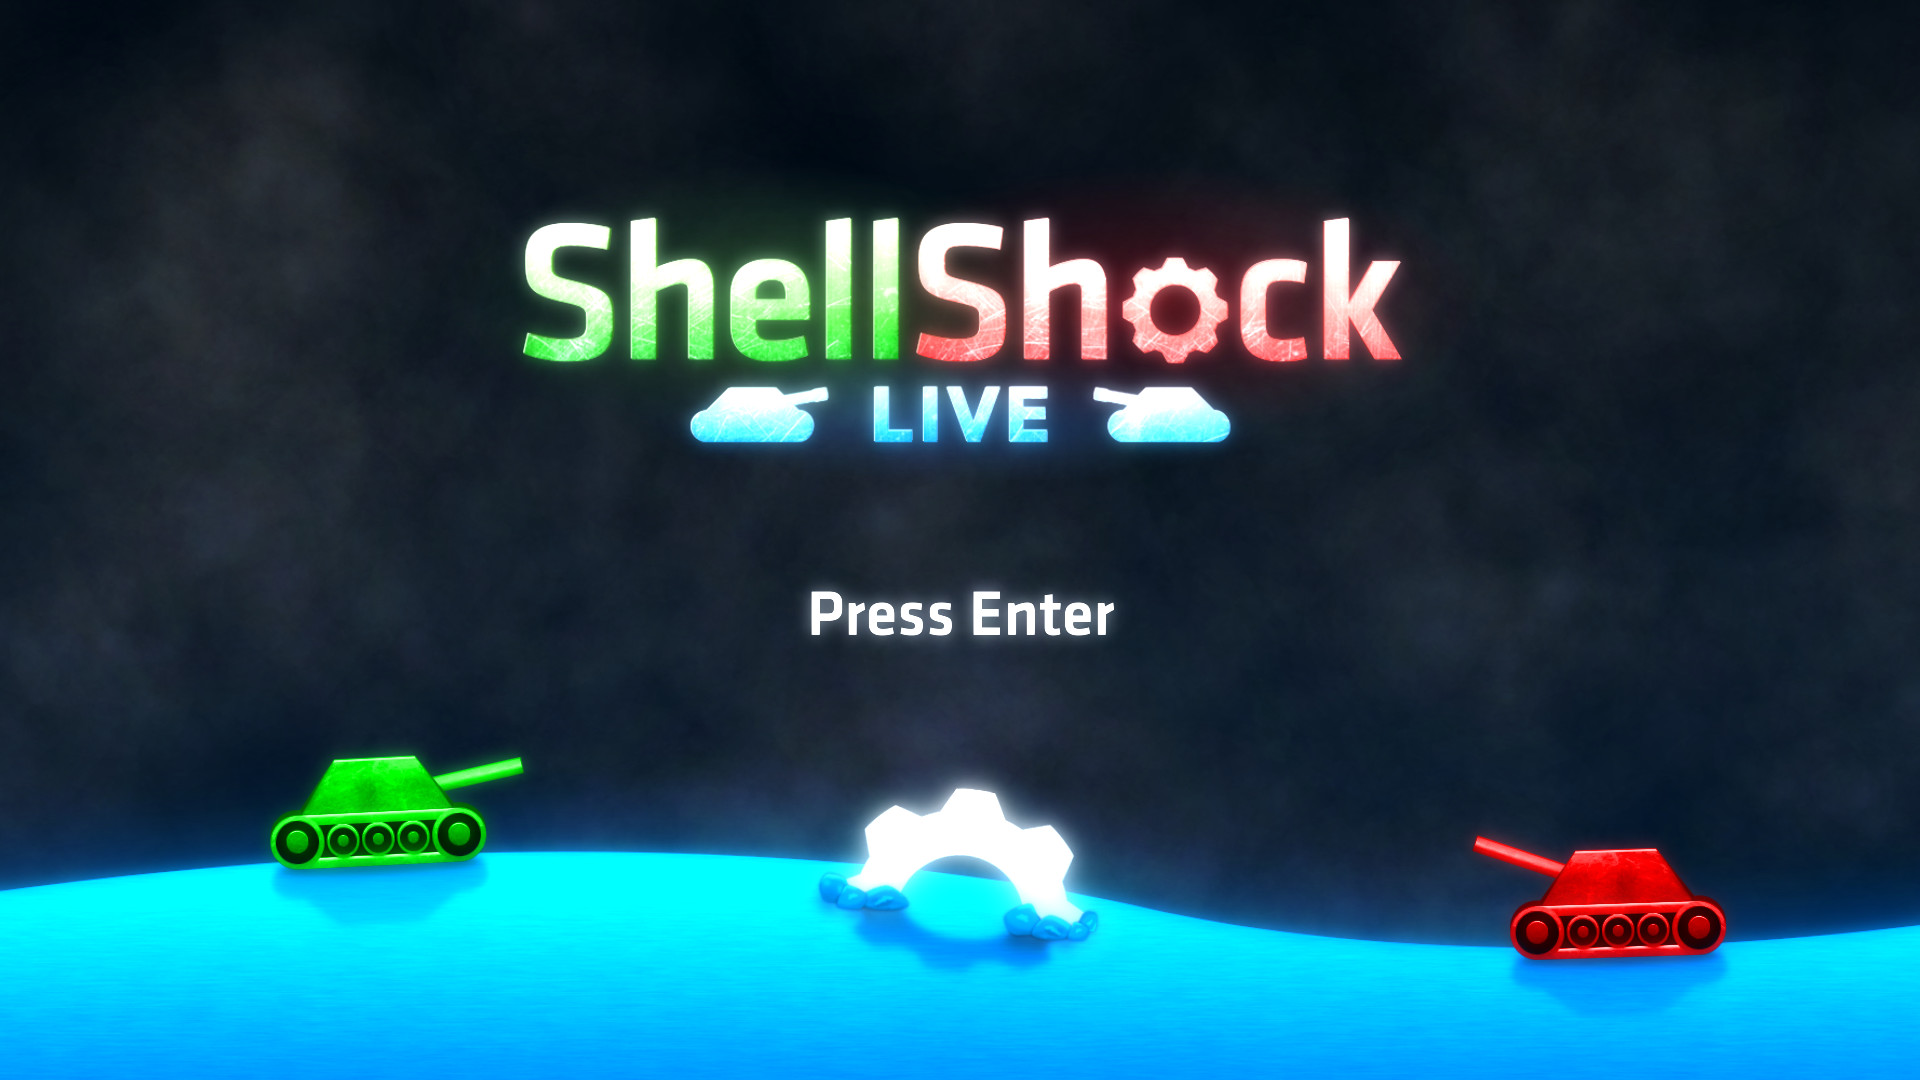 shellshock live items